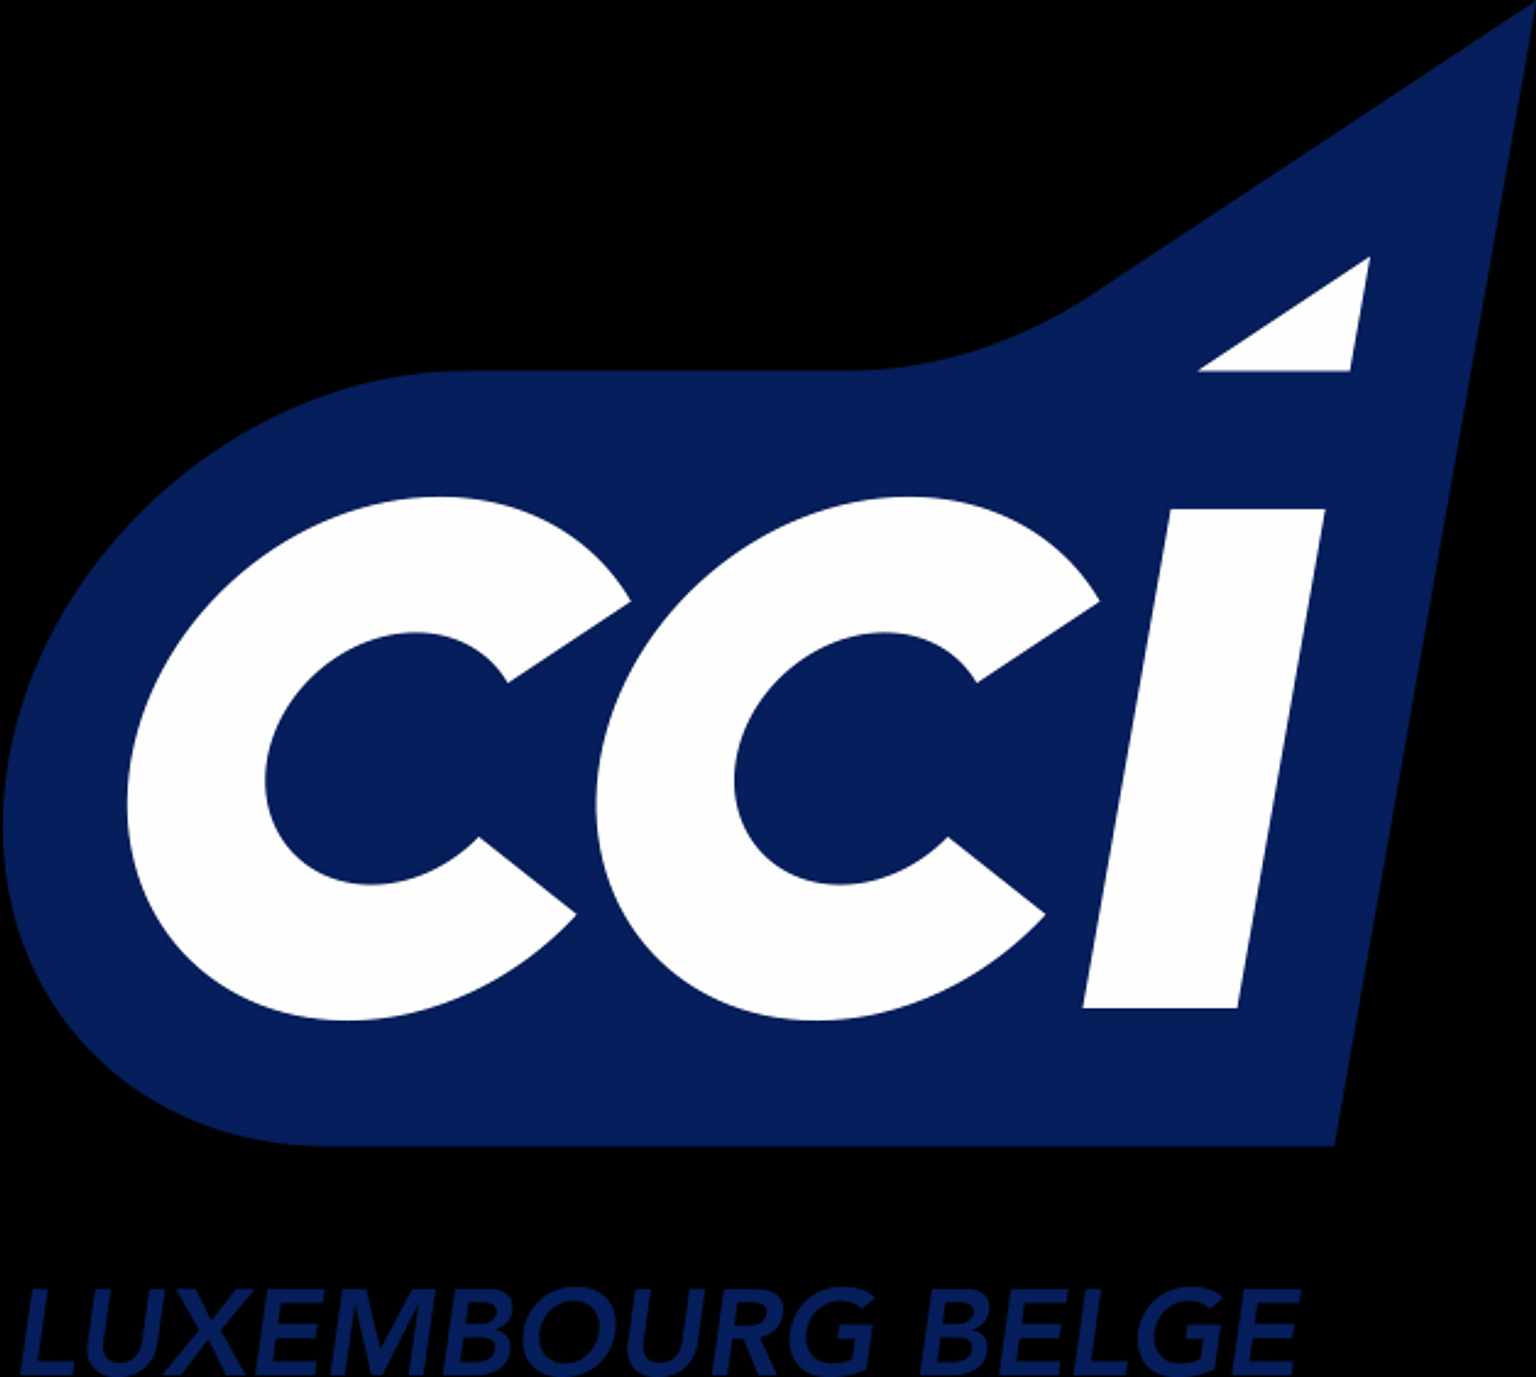 CCI Luxembourg belge